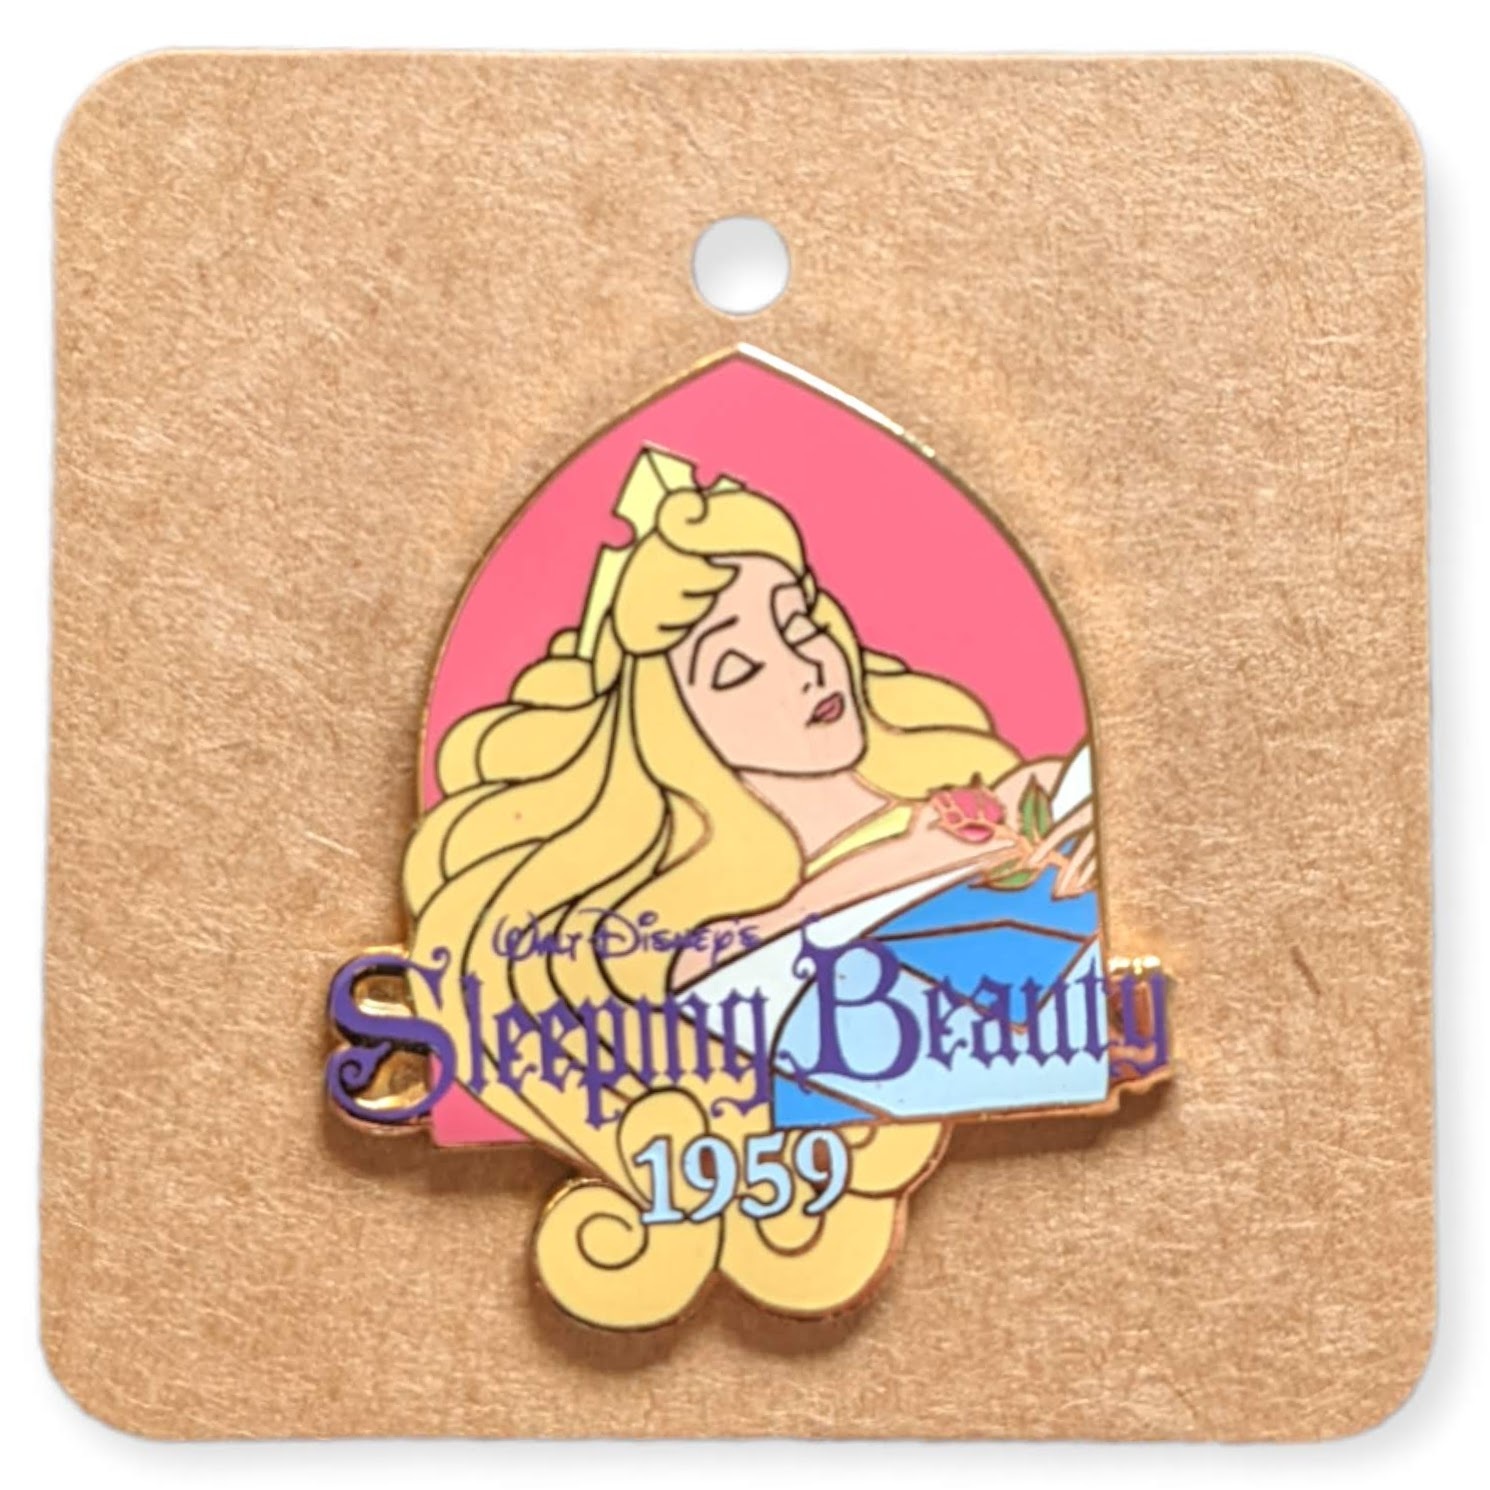 Primary image for Sleeping Beauty Disney Countdown to the Millennium Pin: Aurora Sleeping